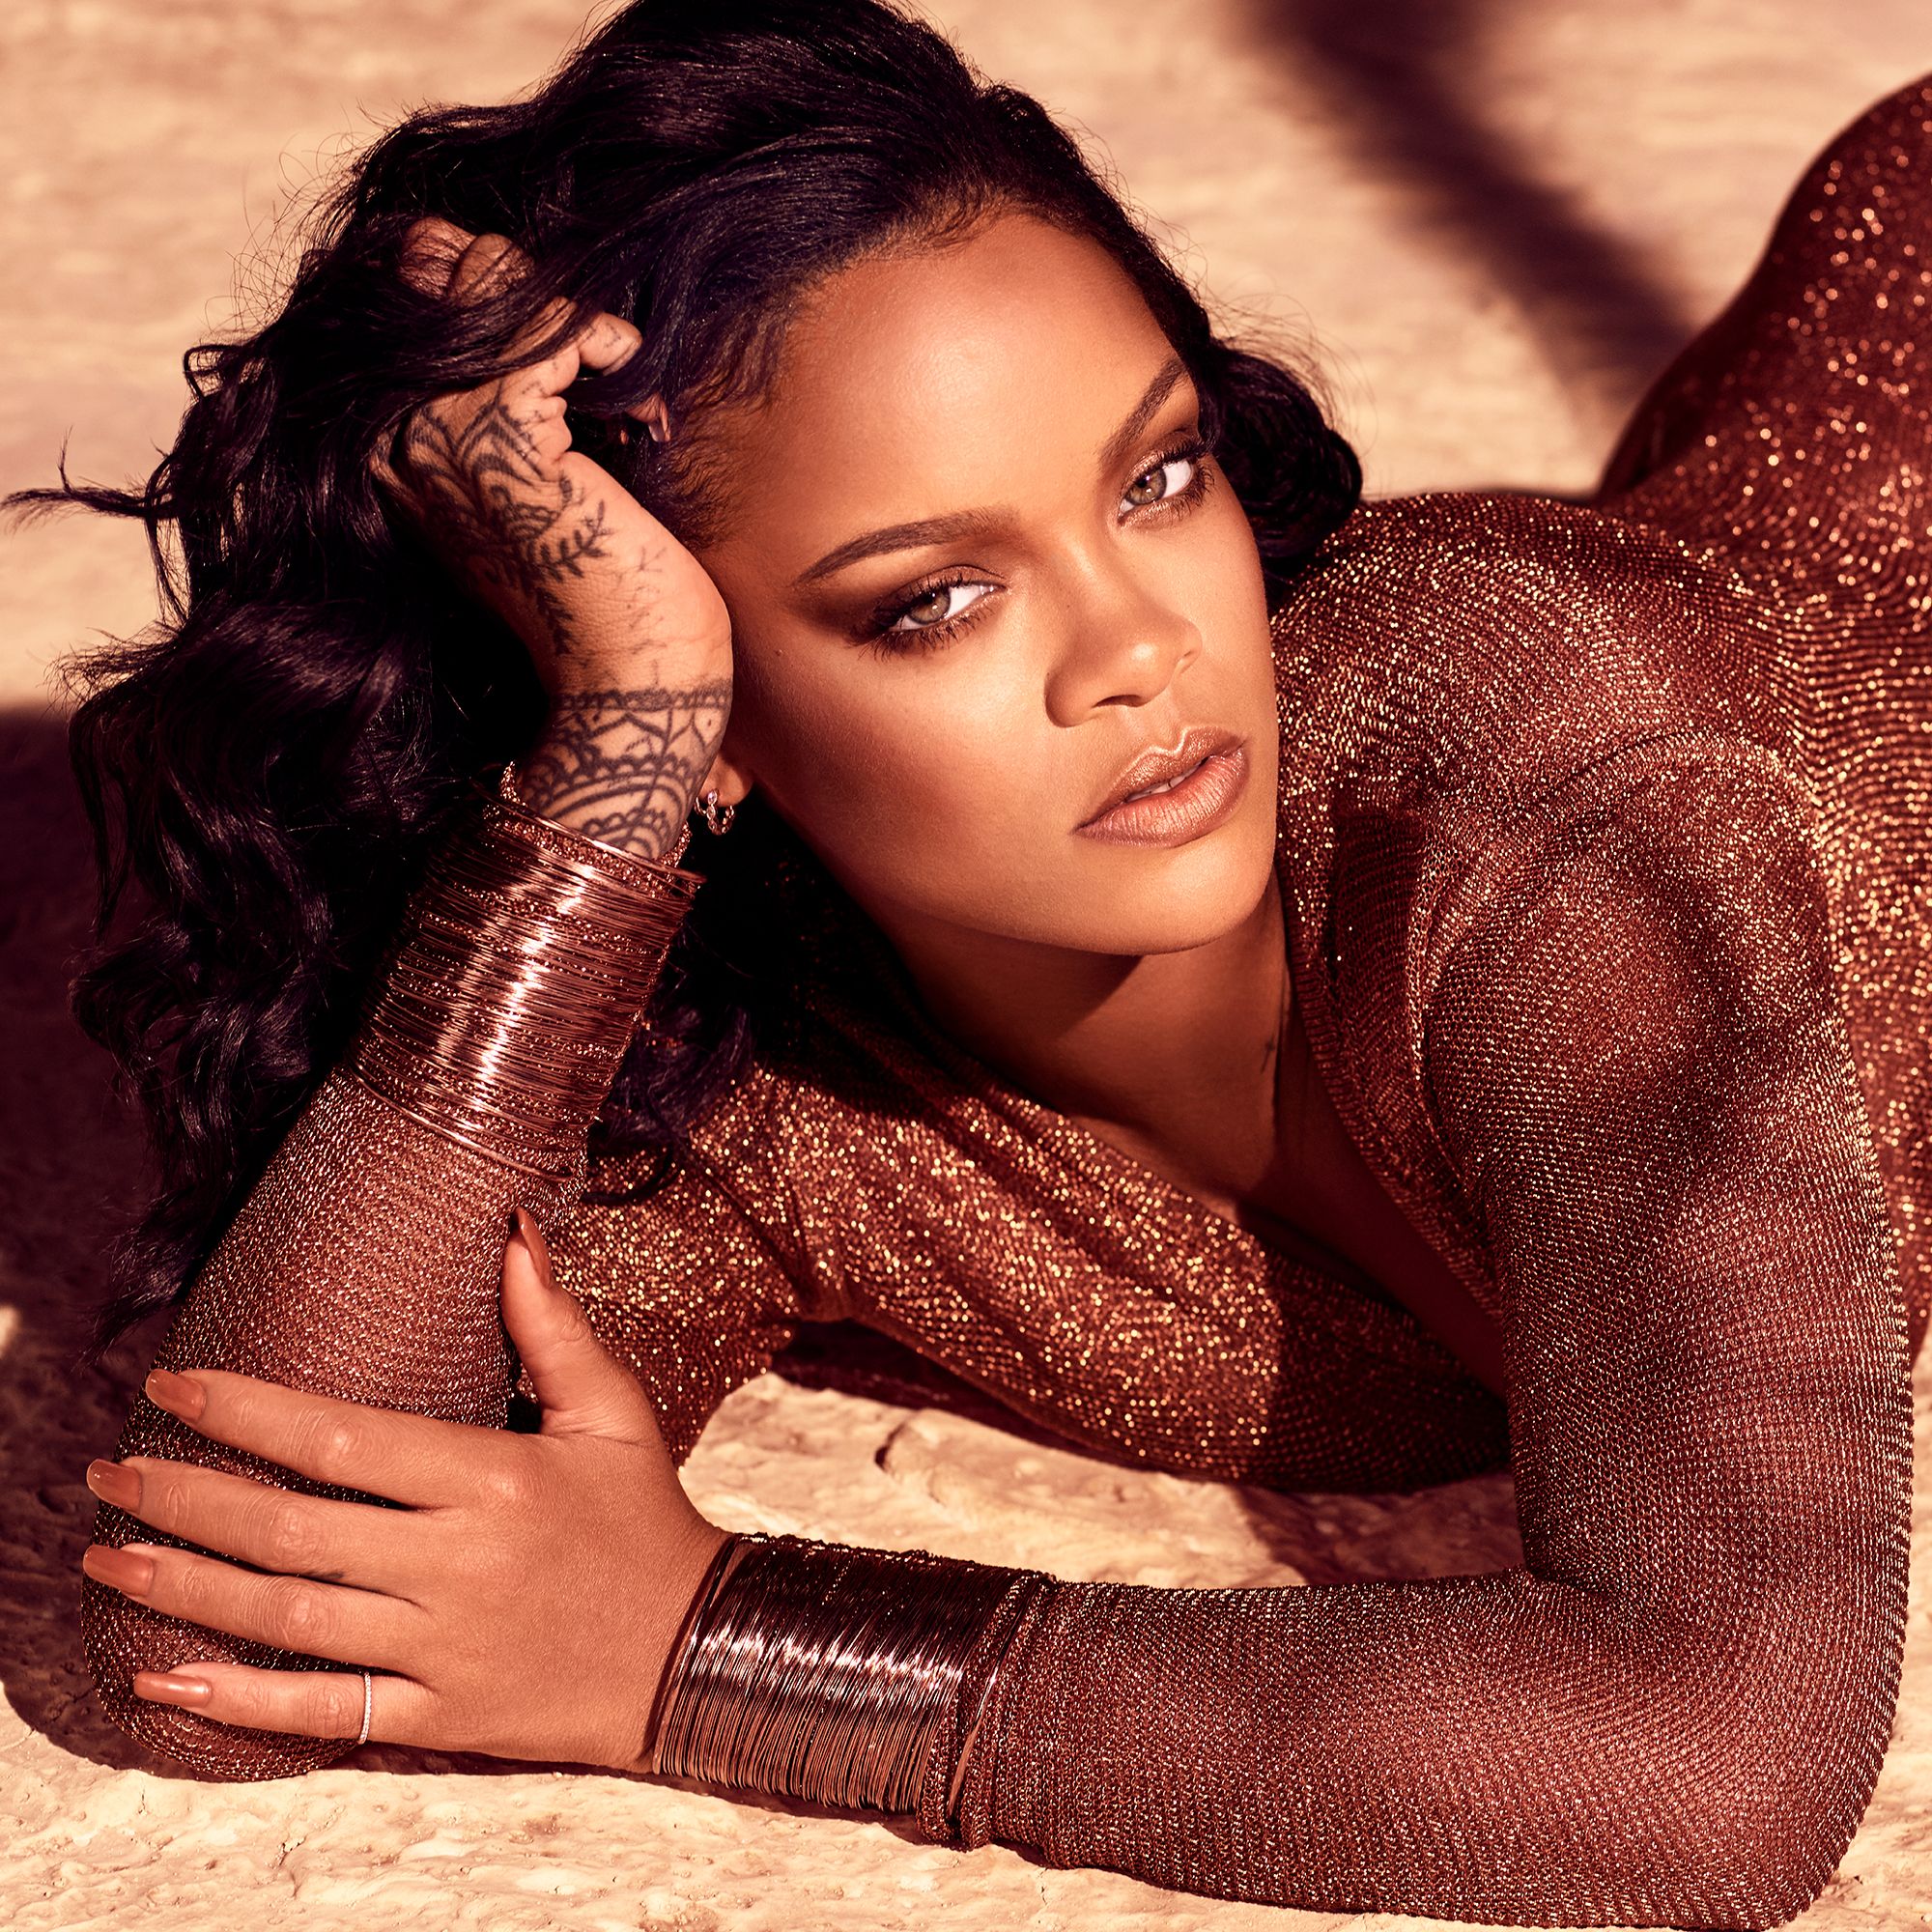 Rihanna's Fenty Beauty Is Now at Target - Mpls.St.Paul Magazine